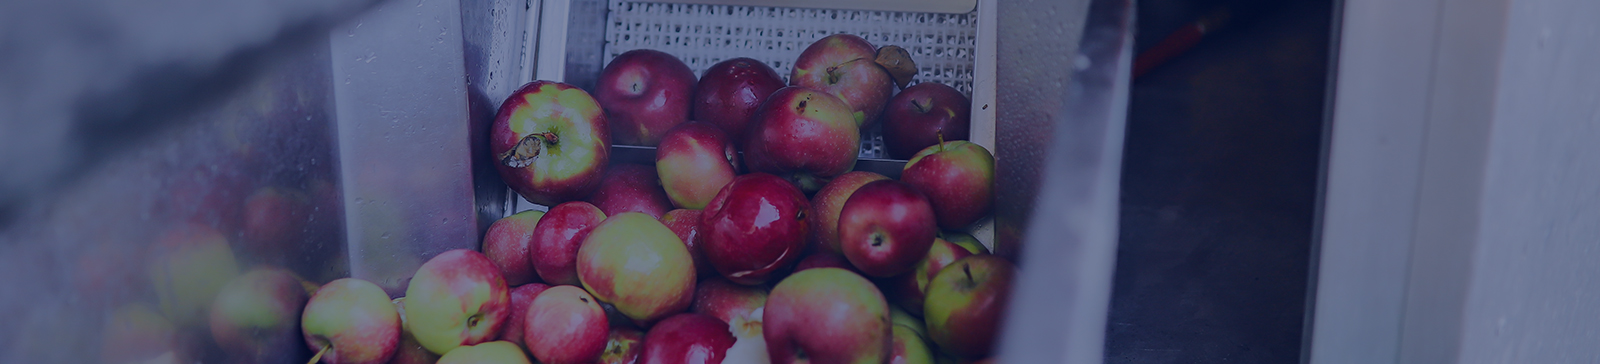 apples in durham region